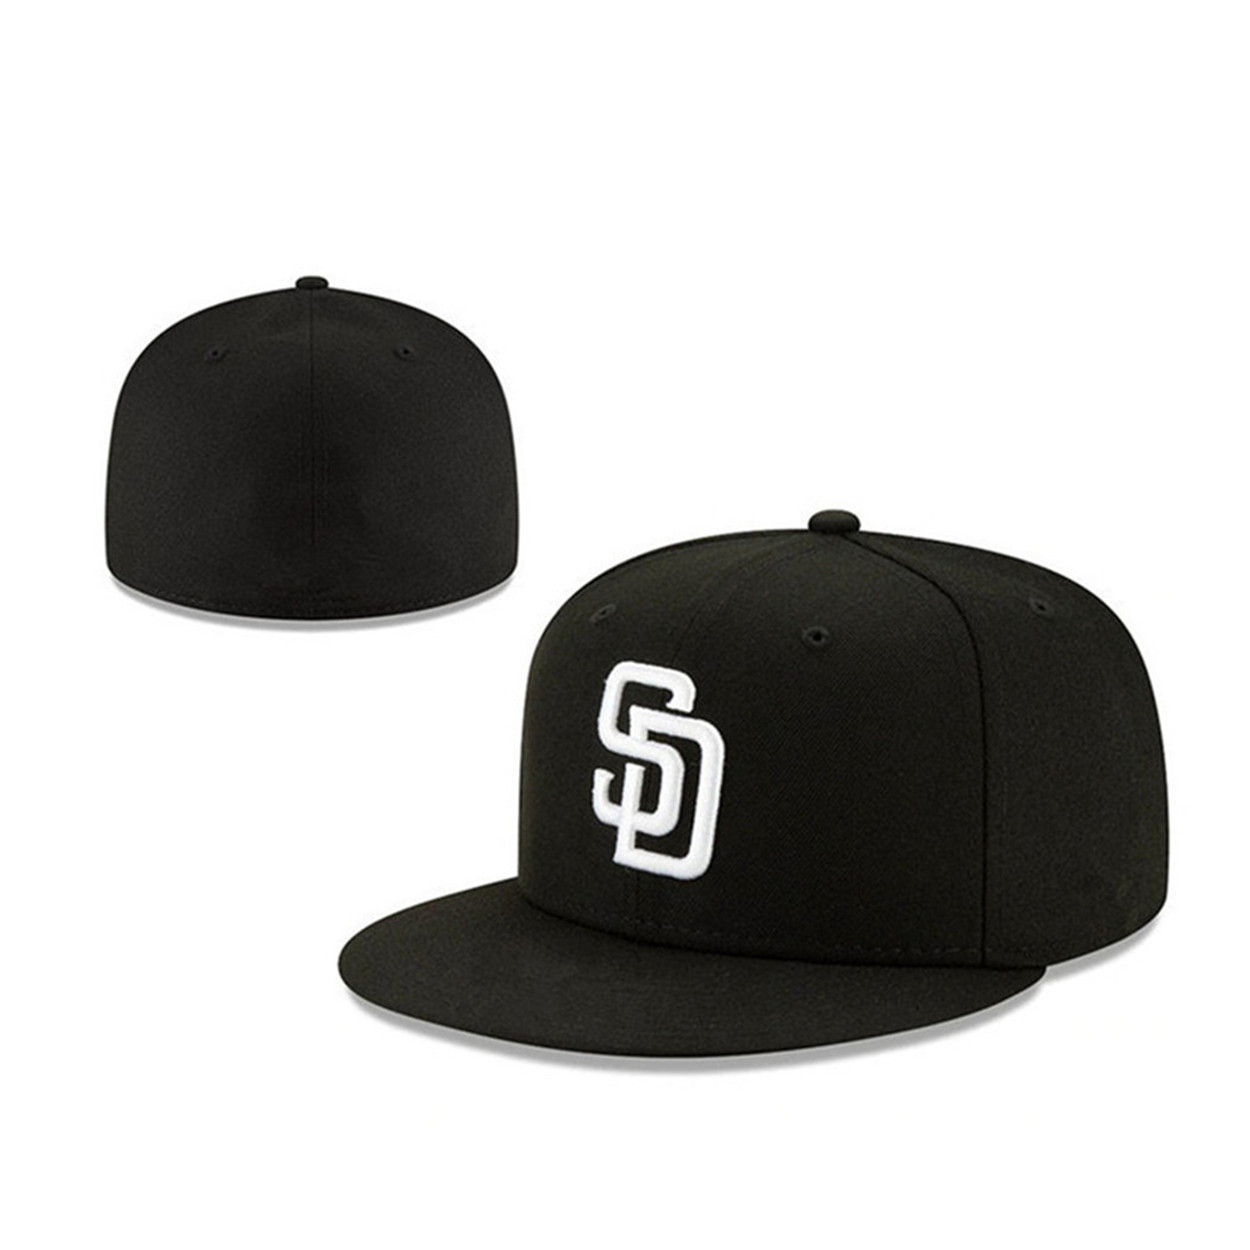 New San Diego Baseballteam Snapback Full Closed Caps Sommer als SD-Brief Gorras Bones Männer Frauen lässig Outdoor Sport flacher Hats Chapeau Cap A-7